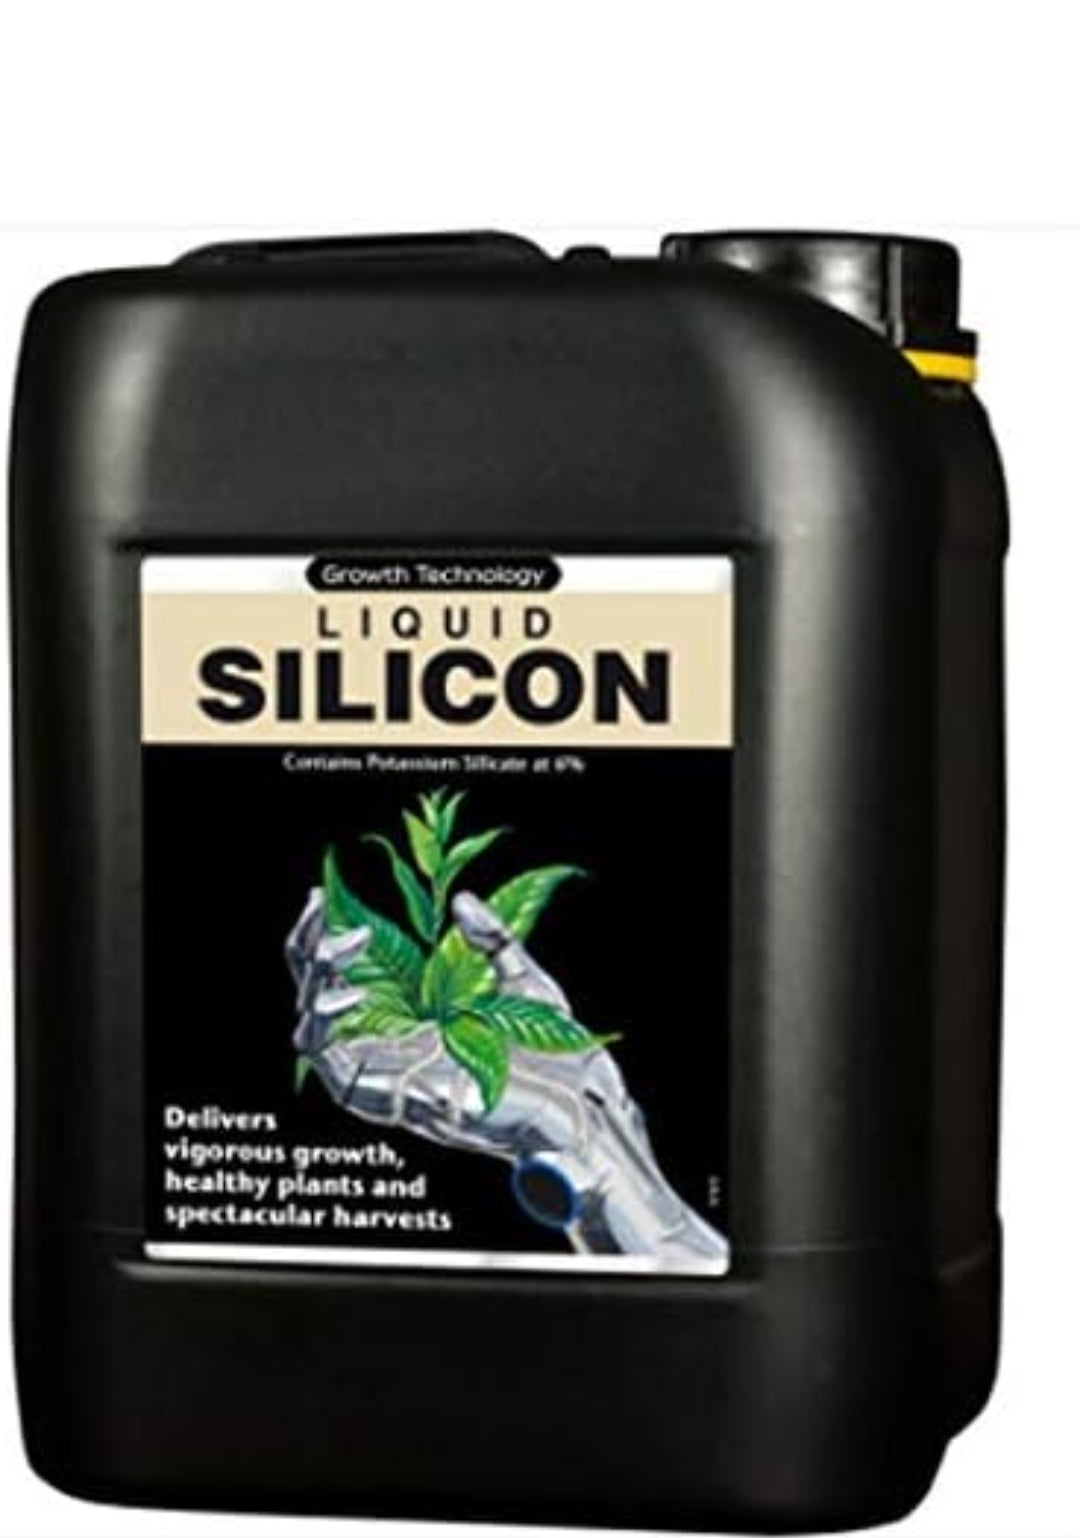 Growth Technology - Liquid Silicone